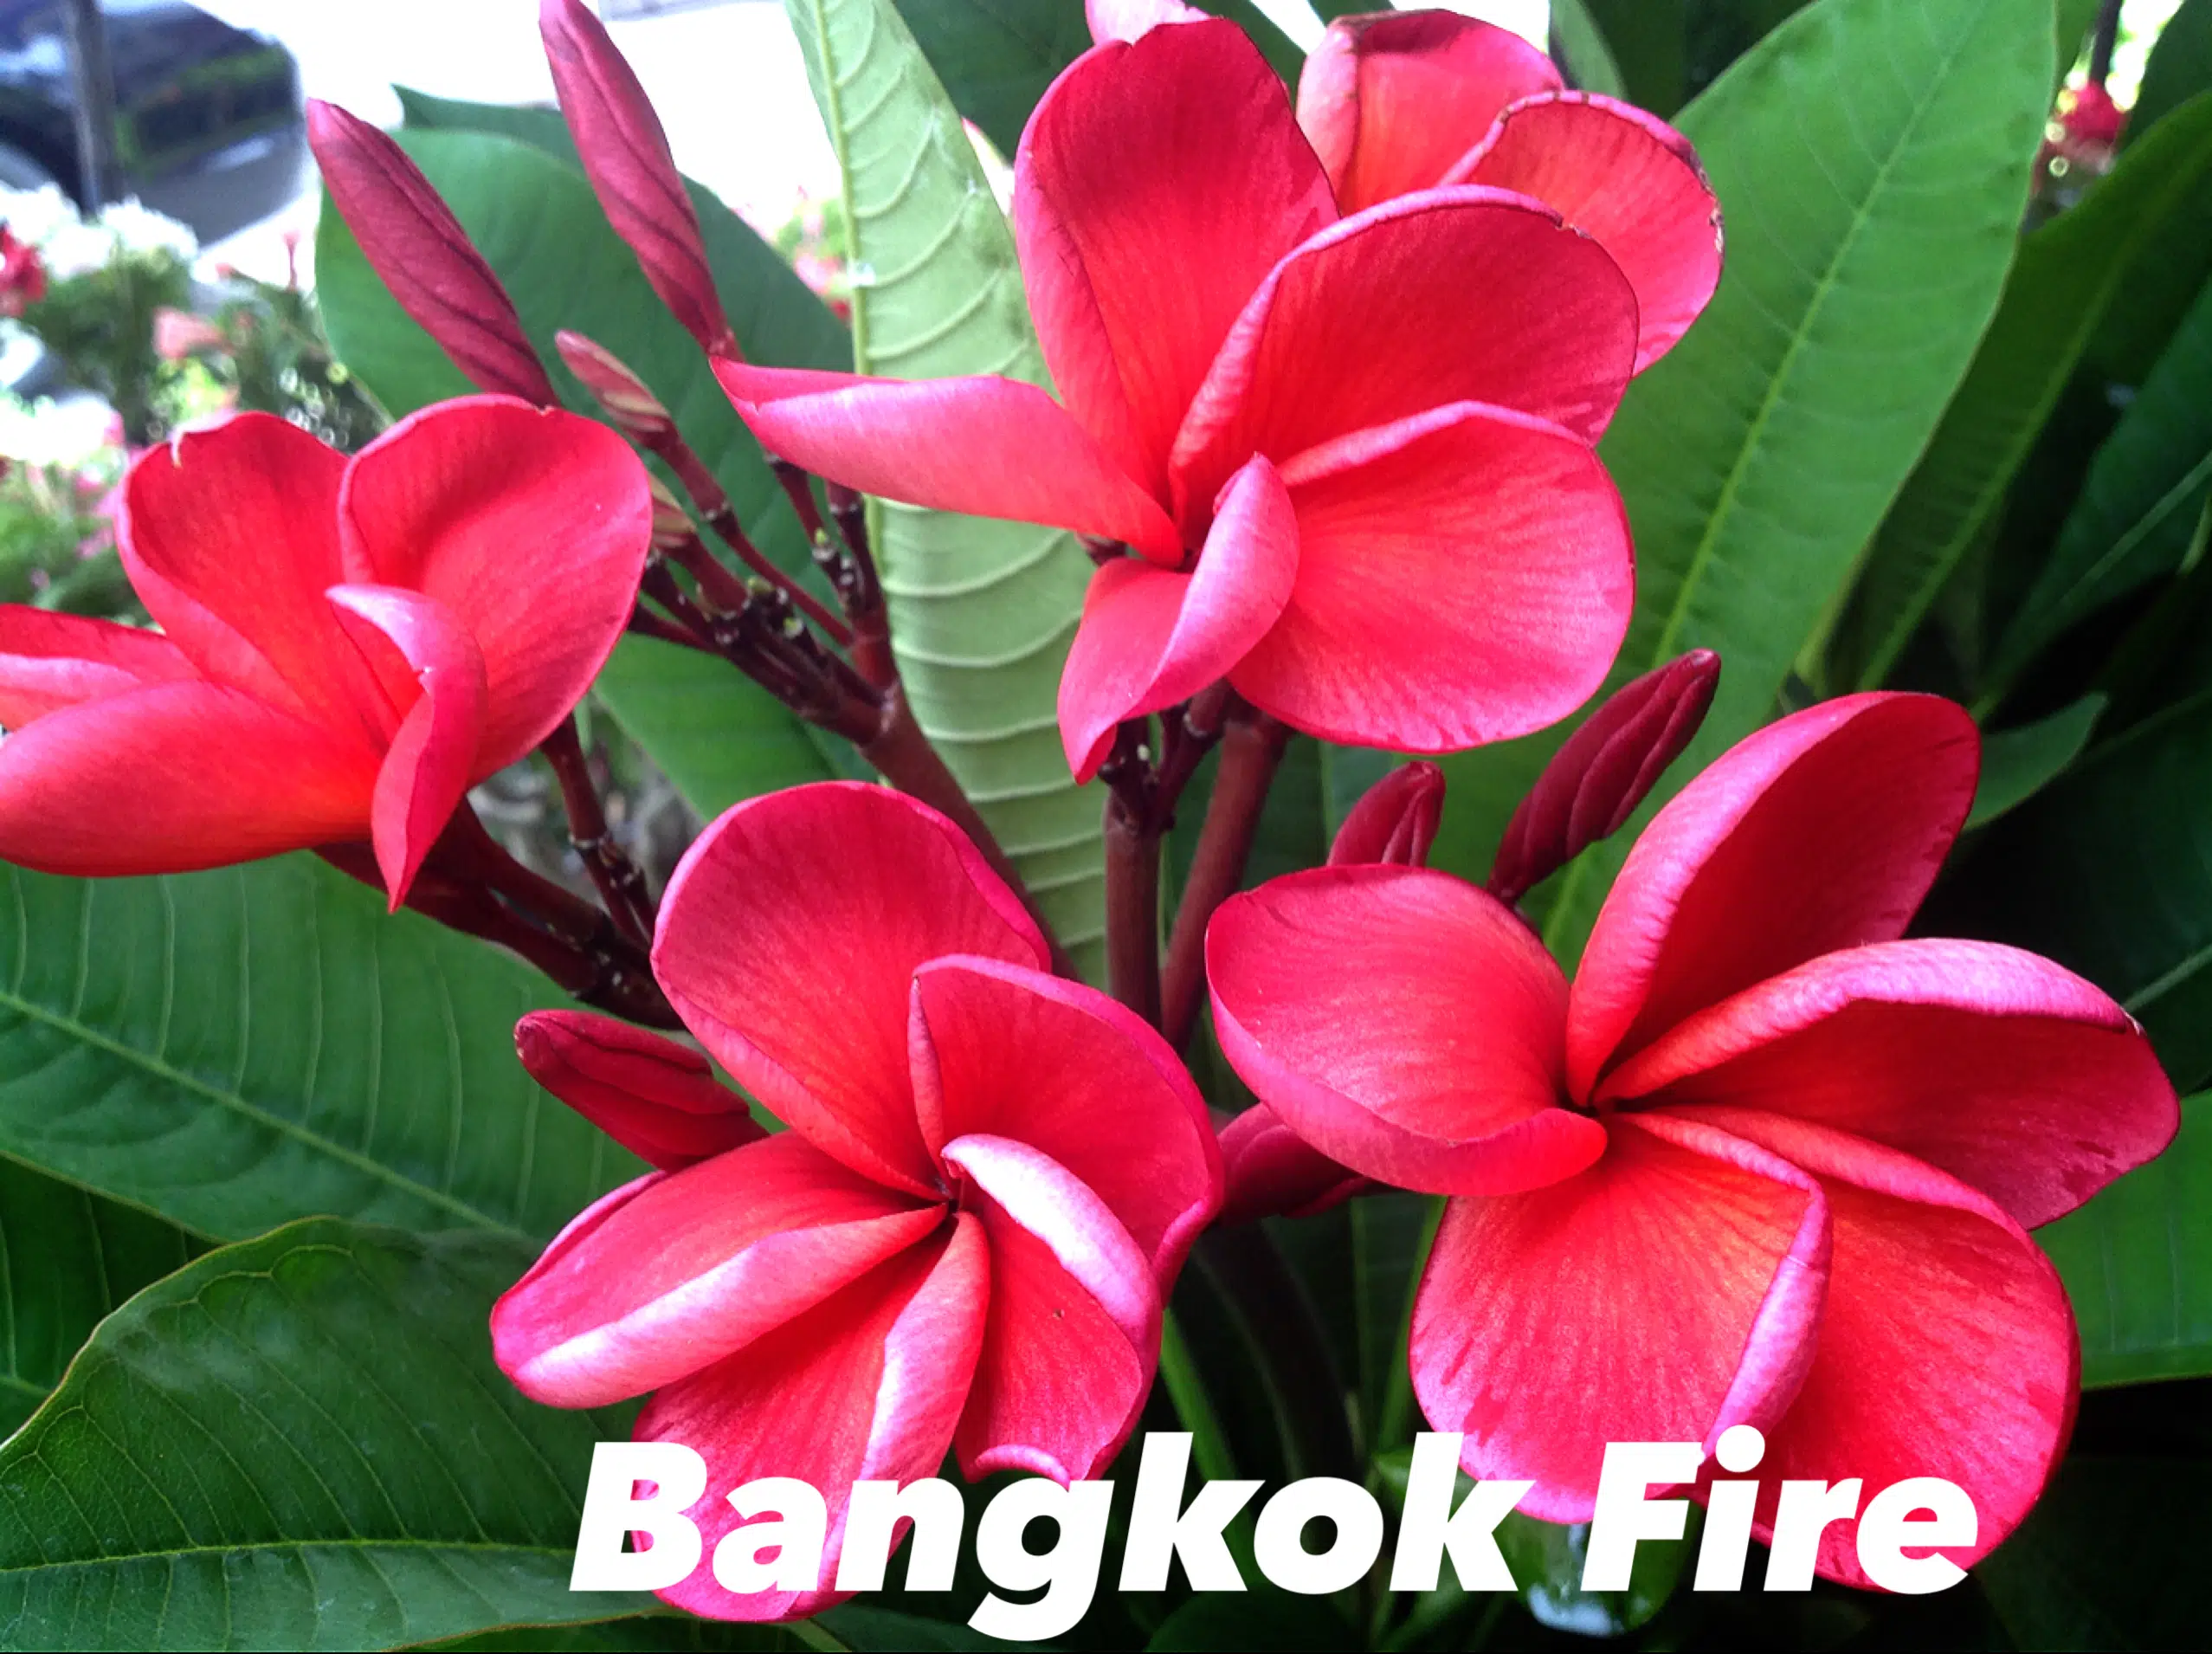 Plumeria rubra 'Bangkok Fire'